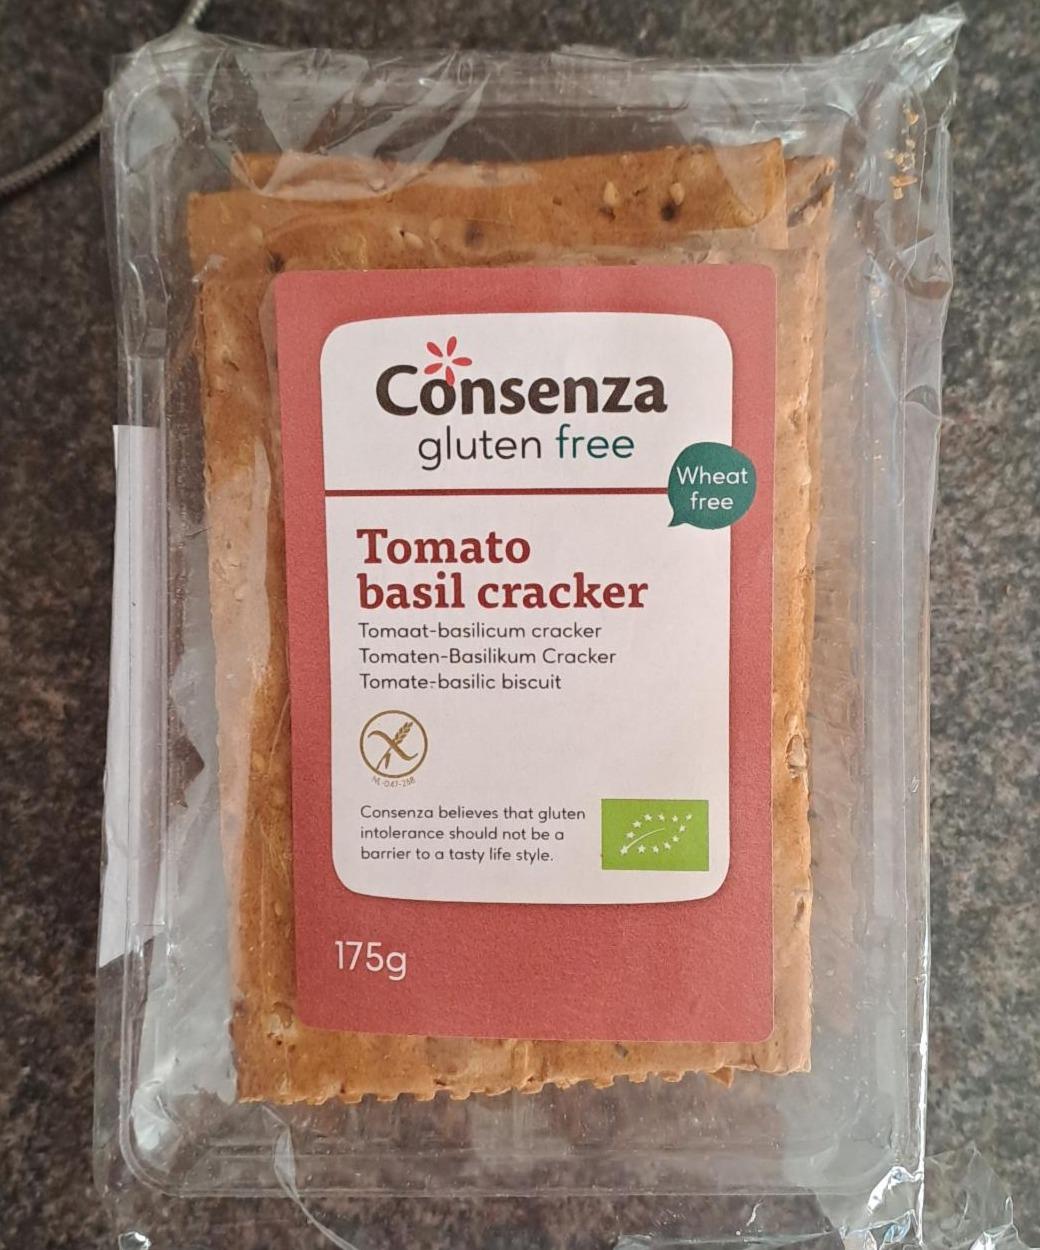 Fotografie - Tomato basil cracker bio gluten free Consenza